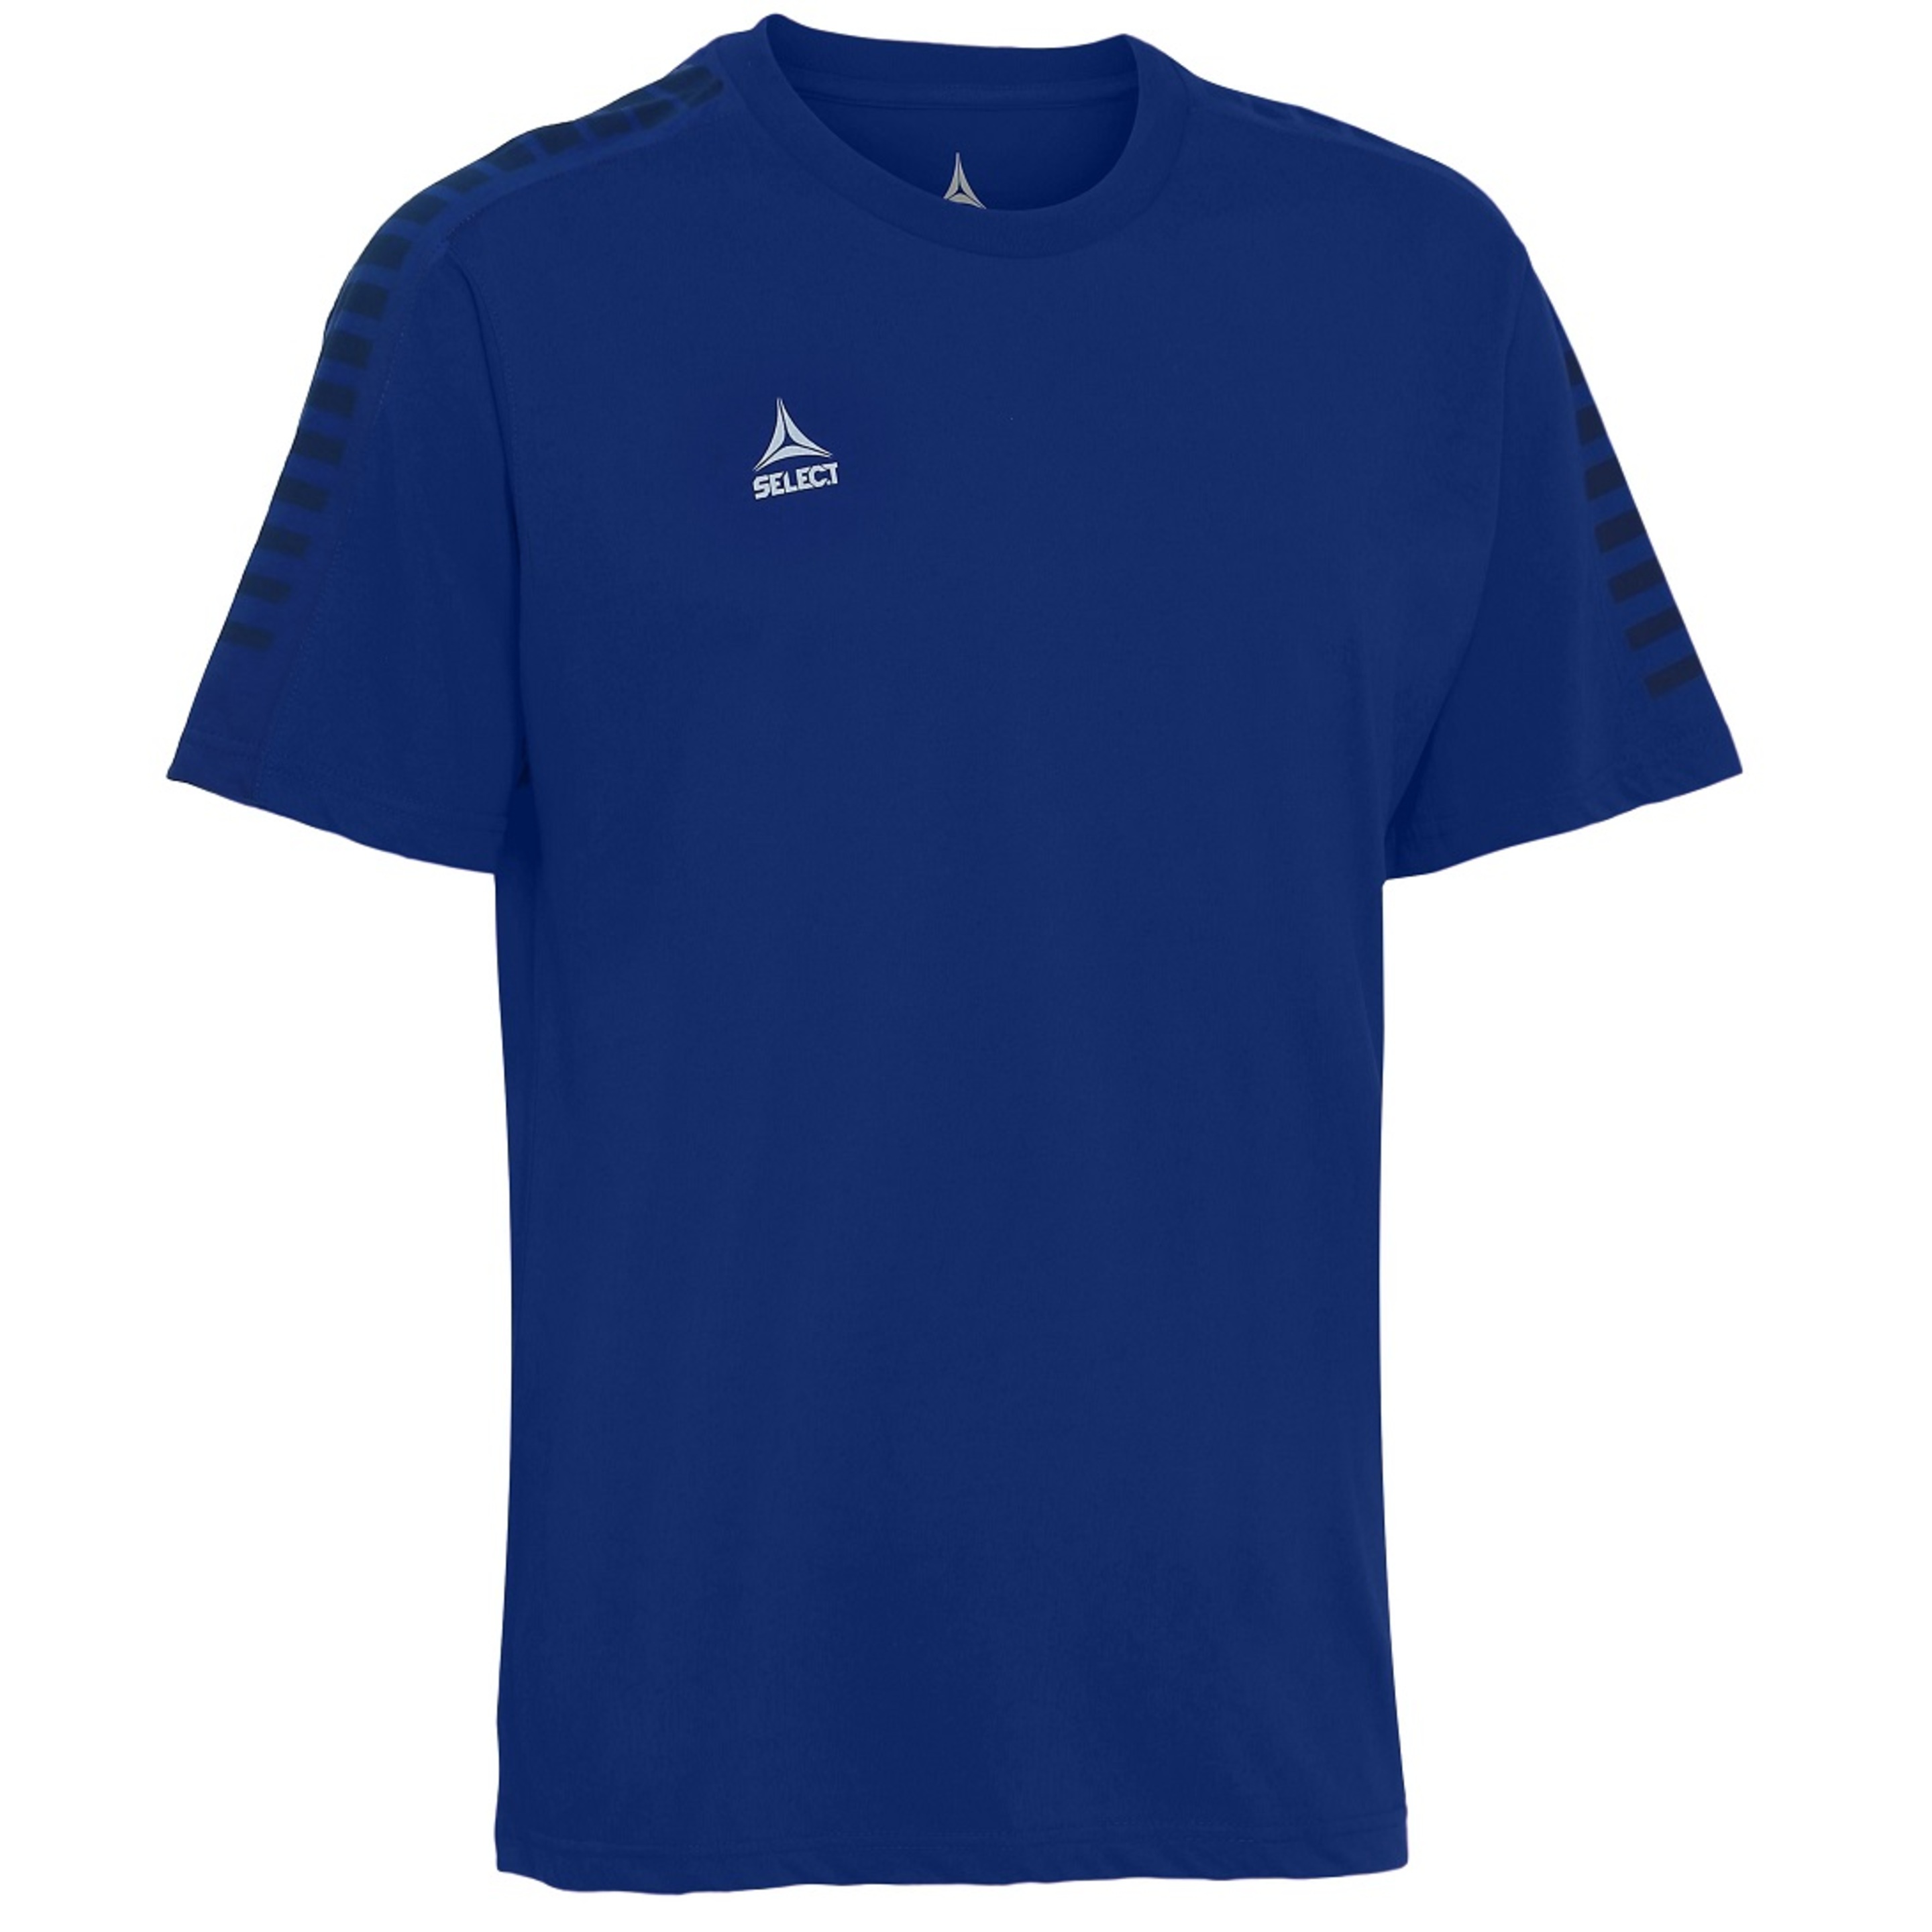 Camiseta Select Torino - azul - 